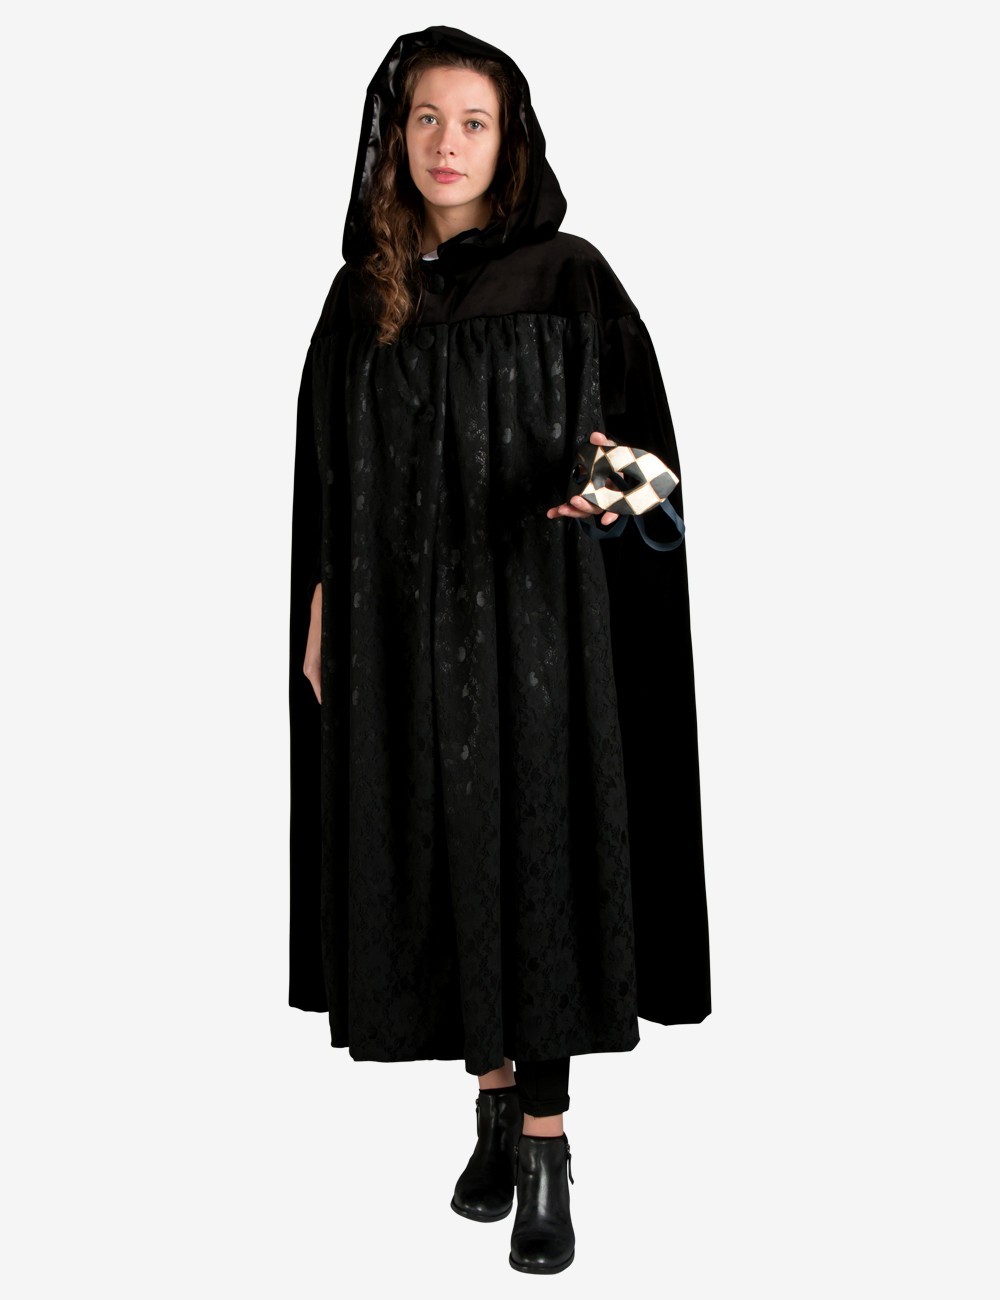 Unisex Black Cloak With Hood In Lace And Velvet Venetian Carnival Costume 6983